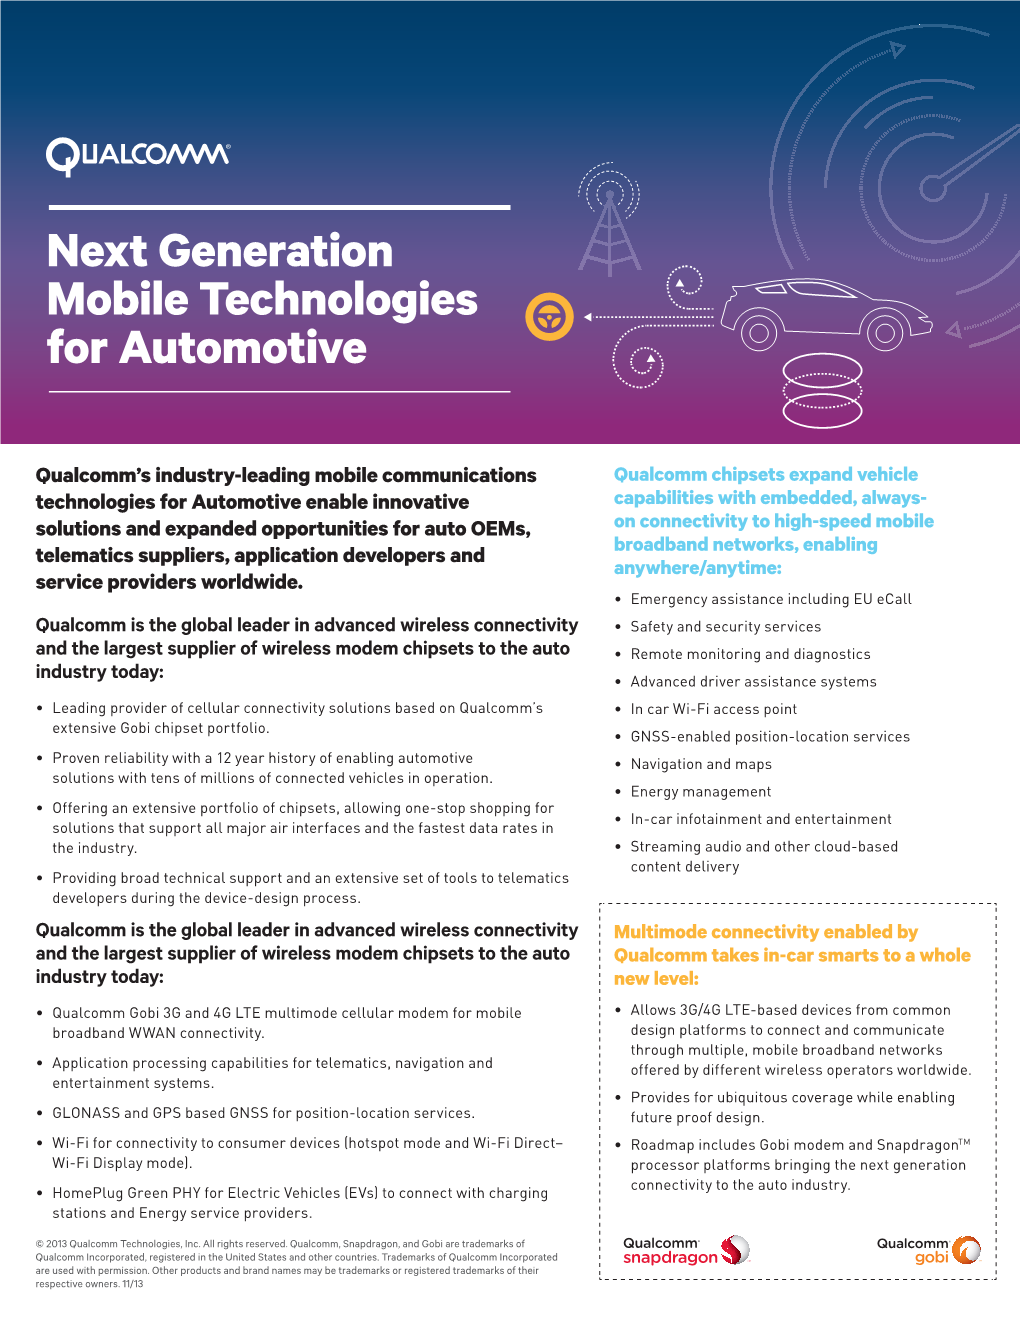 Next Generation Mobile Technologies for Automotive